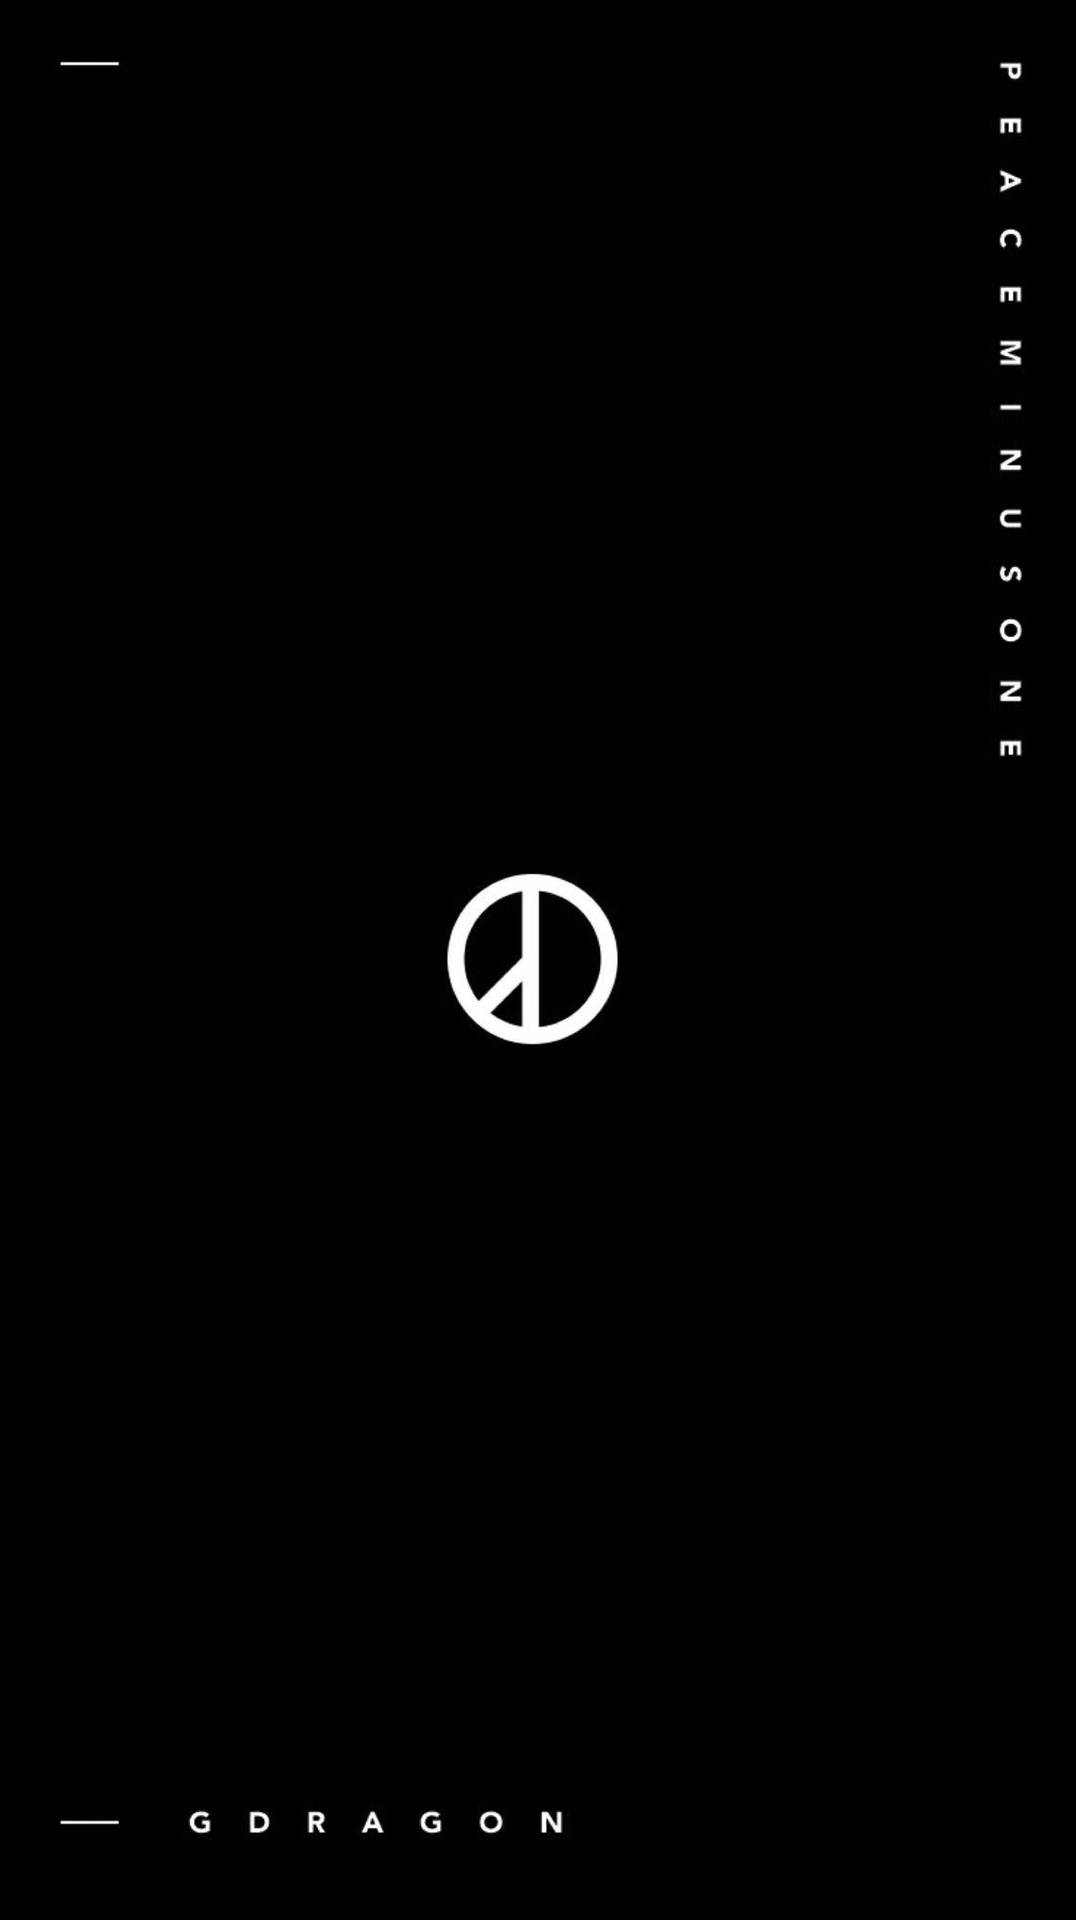 Peaceminusoneoffizielles Logo Wallpaper